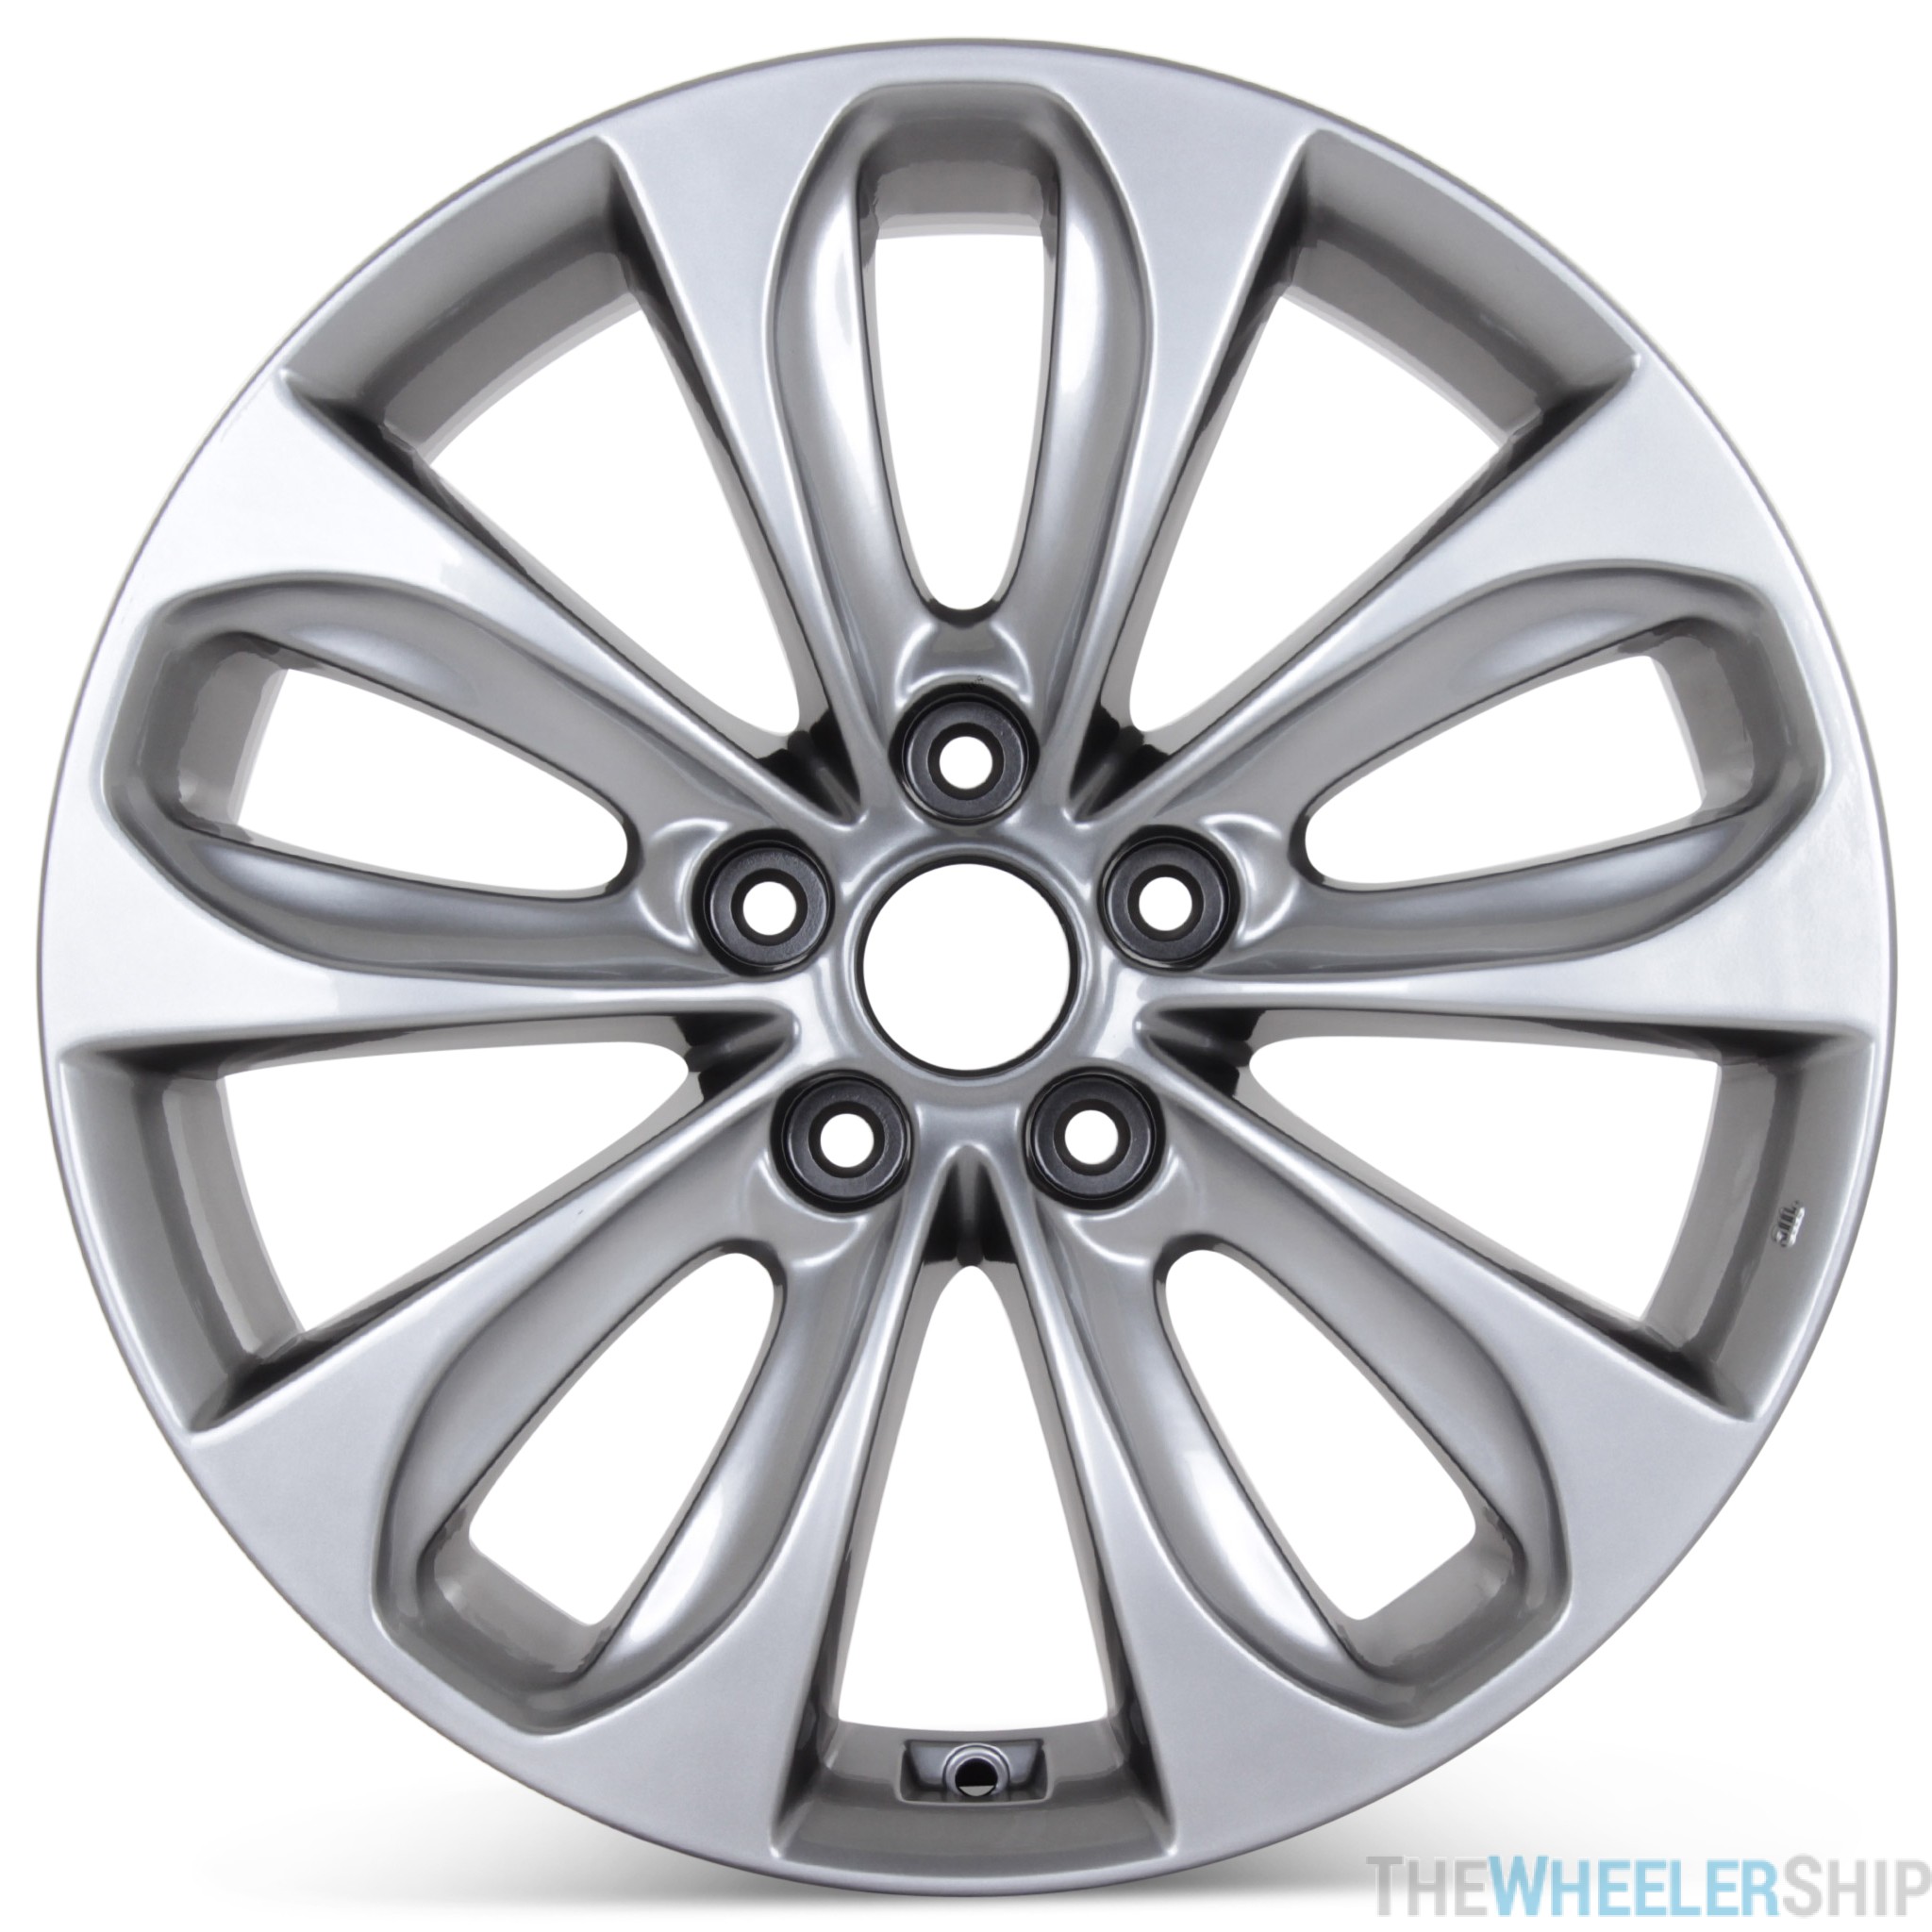 2011-2013 Hyundai Sonata Wheels | 18" Hyundai Wheels for Sale